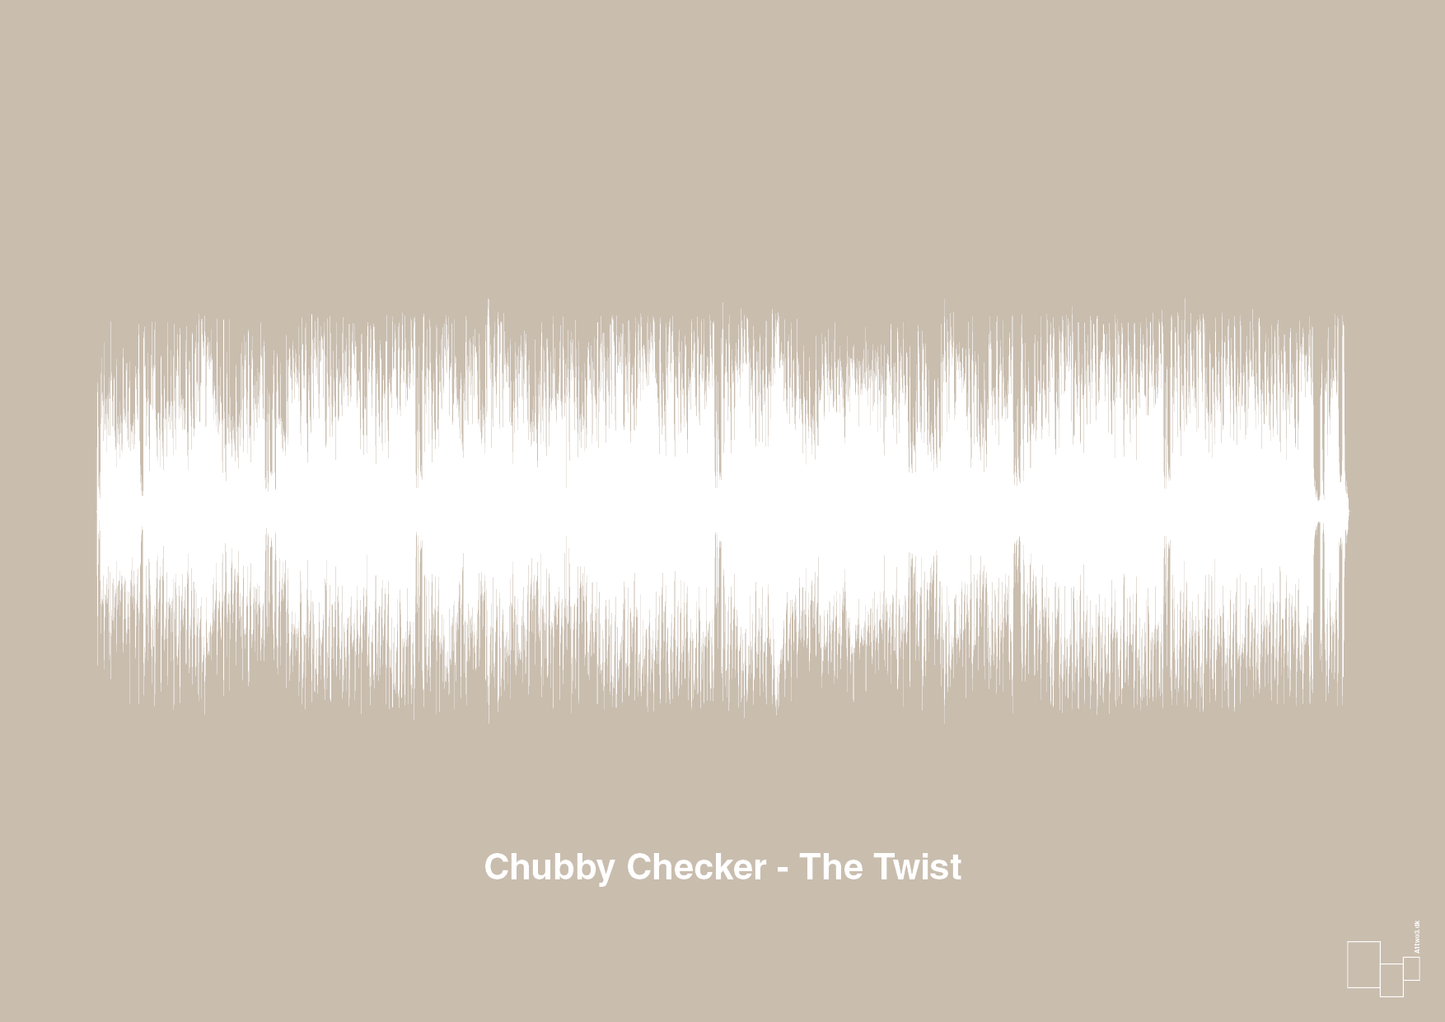 chubby checker - the twist - Plakat med Musik i Creamy Mushroom